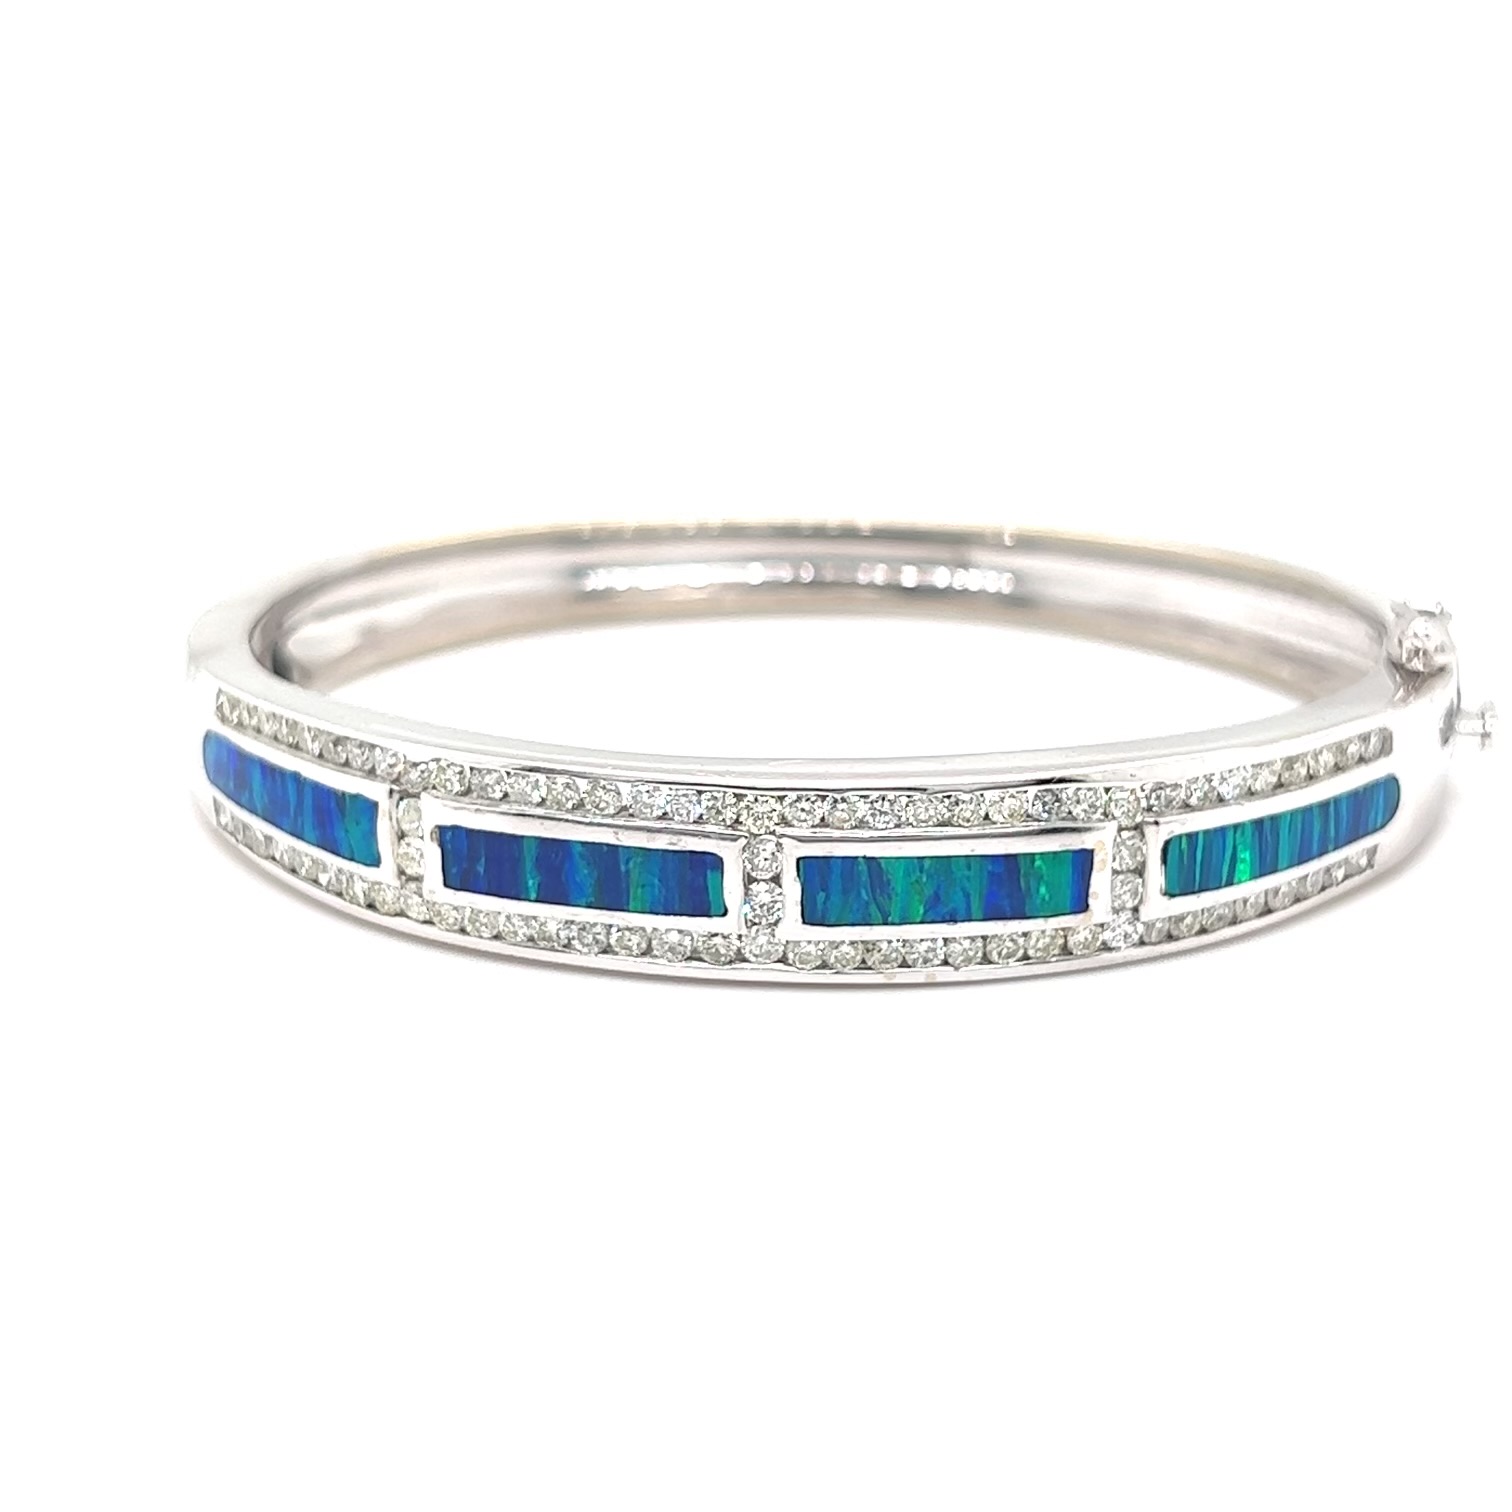 A blue sapphire and diamond bangle | Prinseps